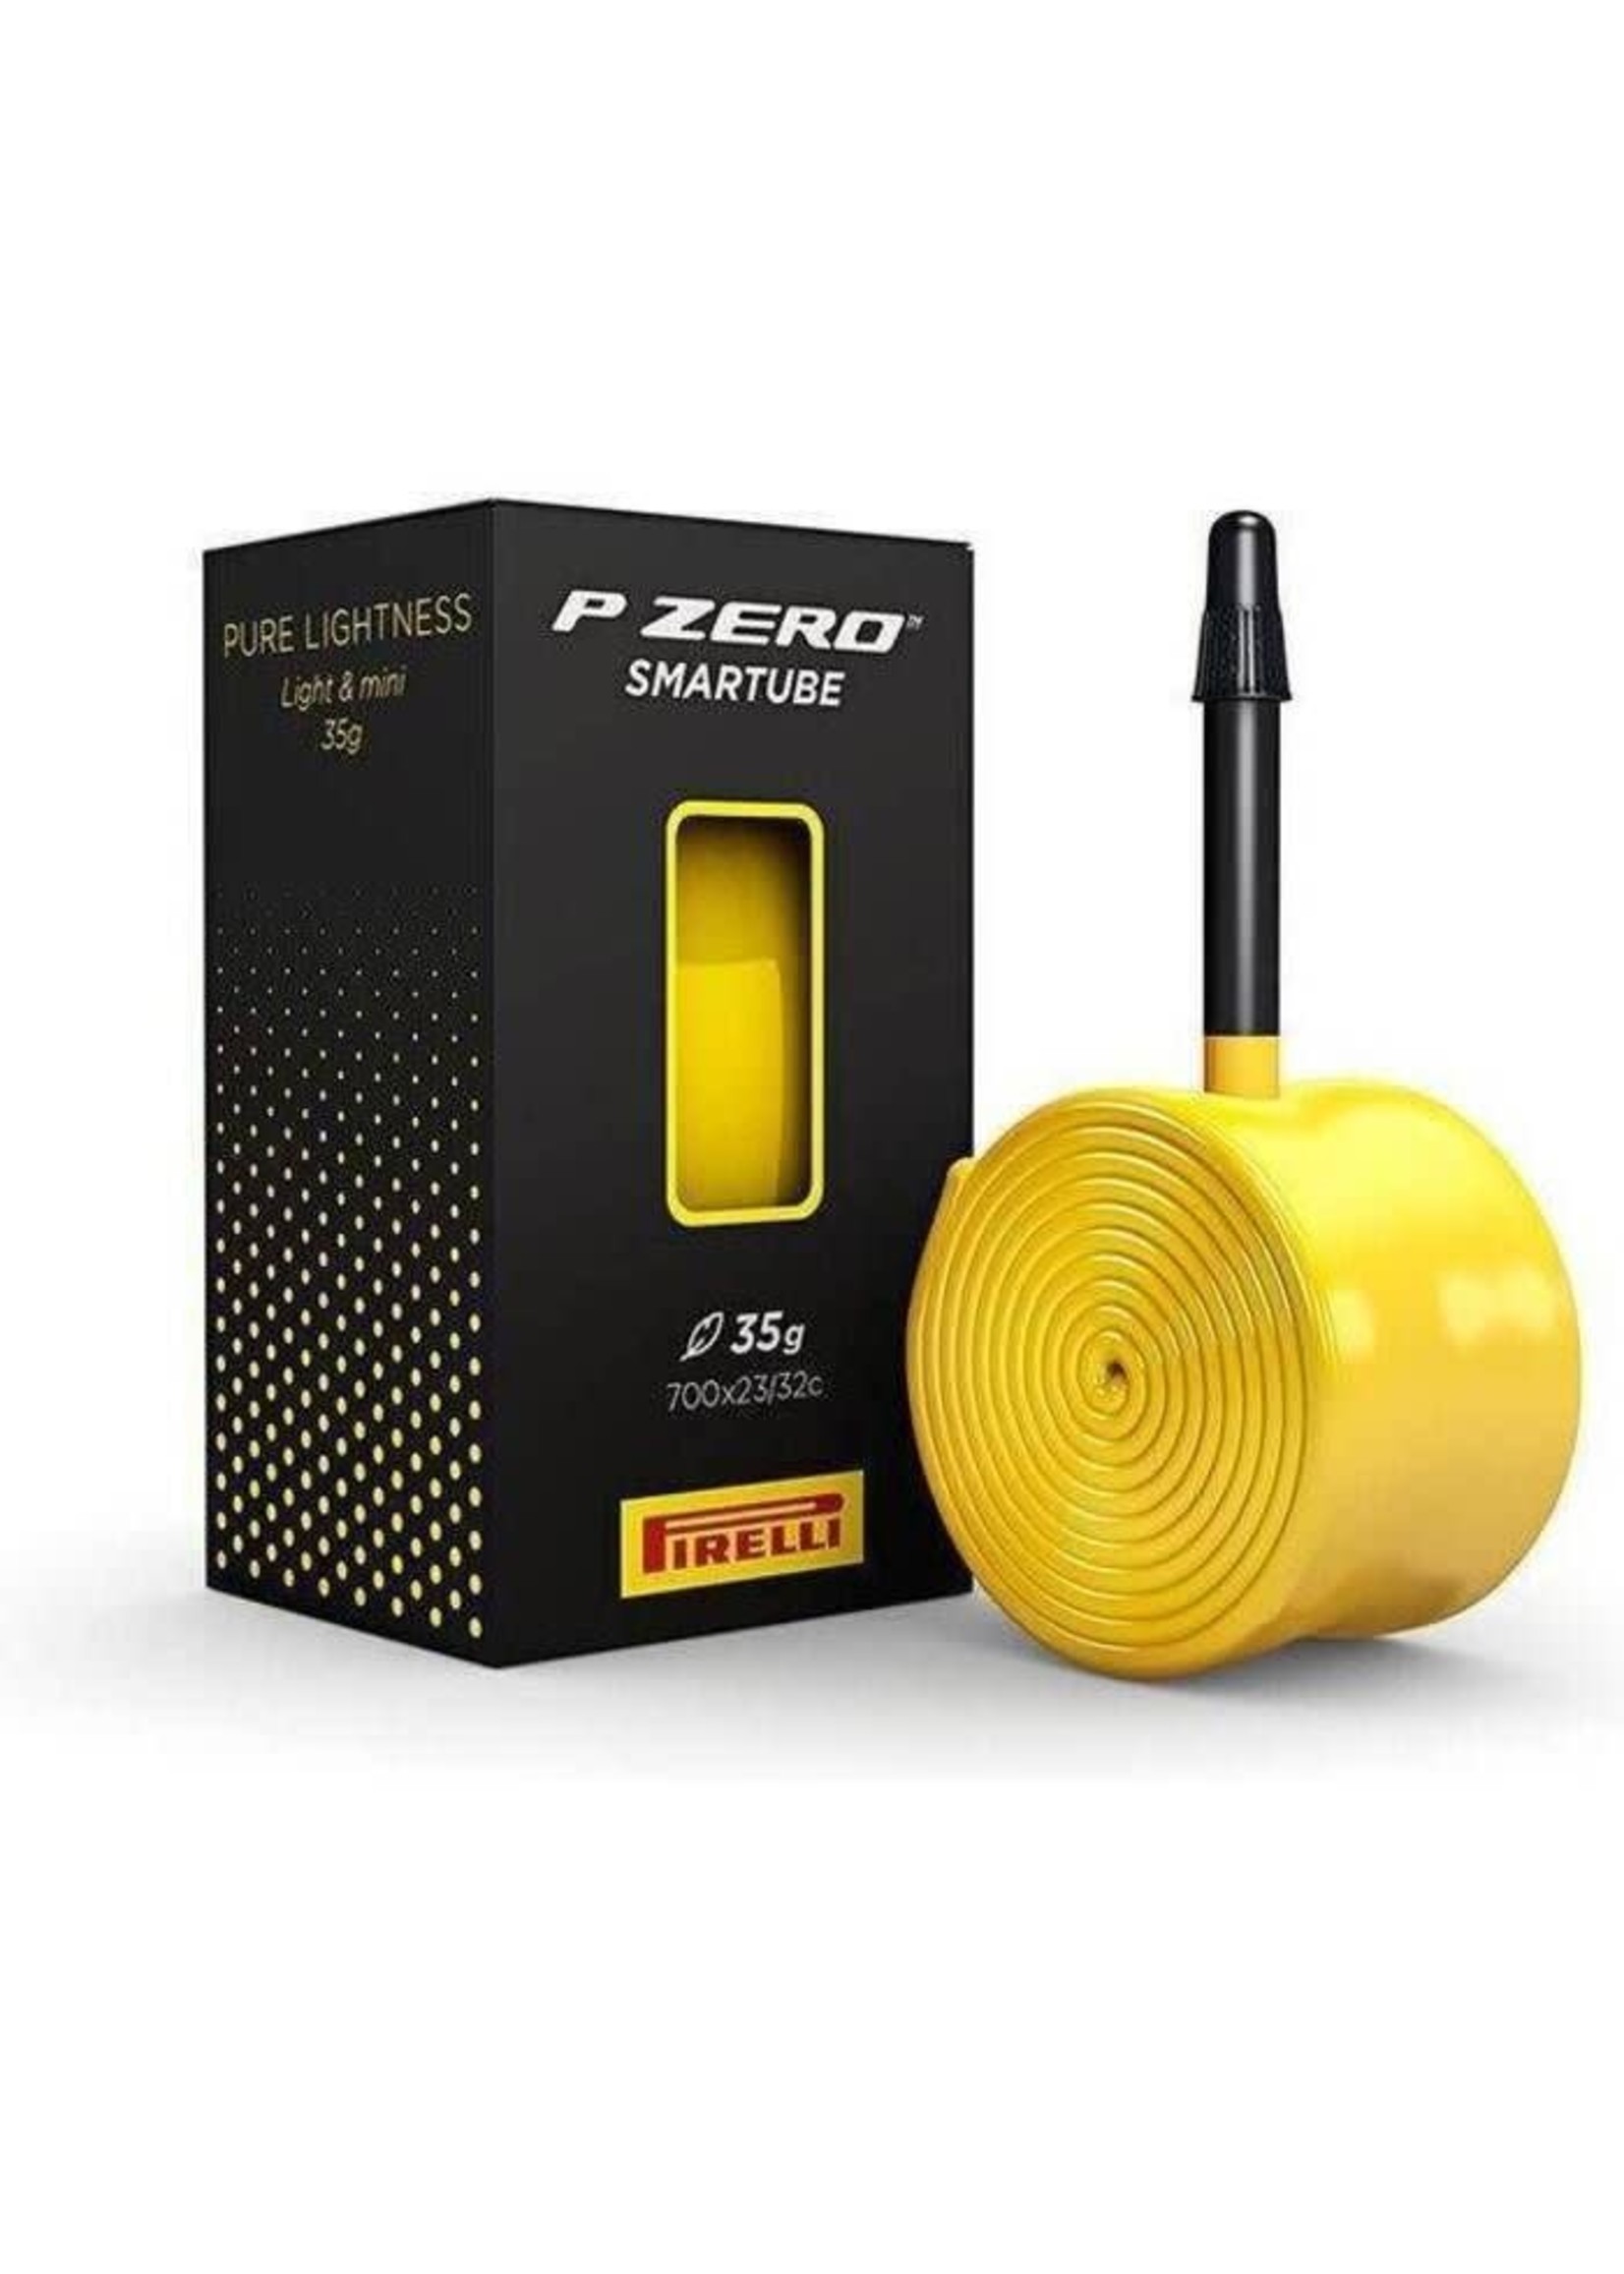 Pirelli PIRELLI - Chambre à air - Scorpion Smartube - 700x23/32 - 60mm